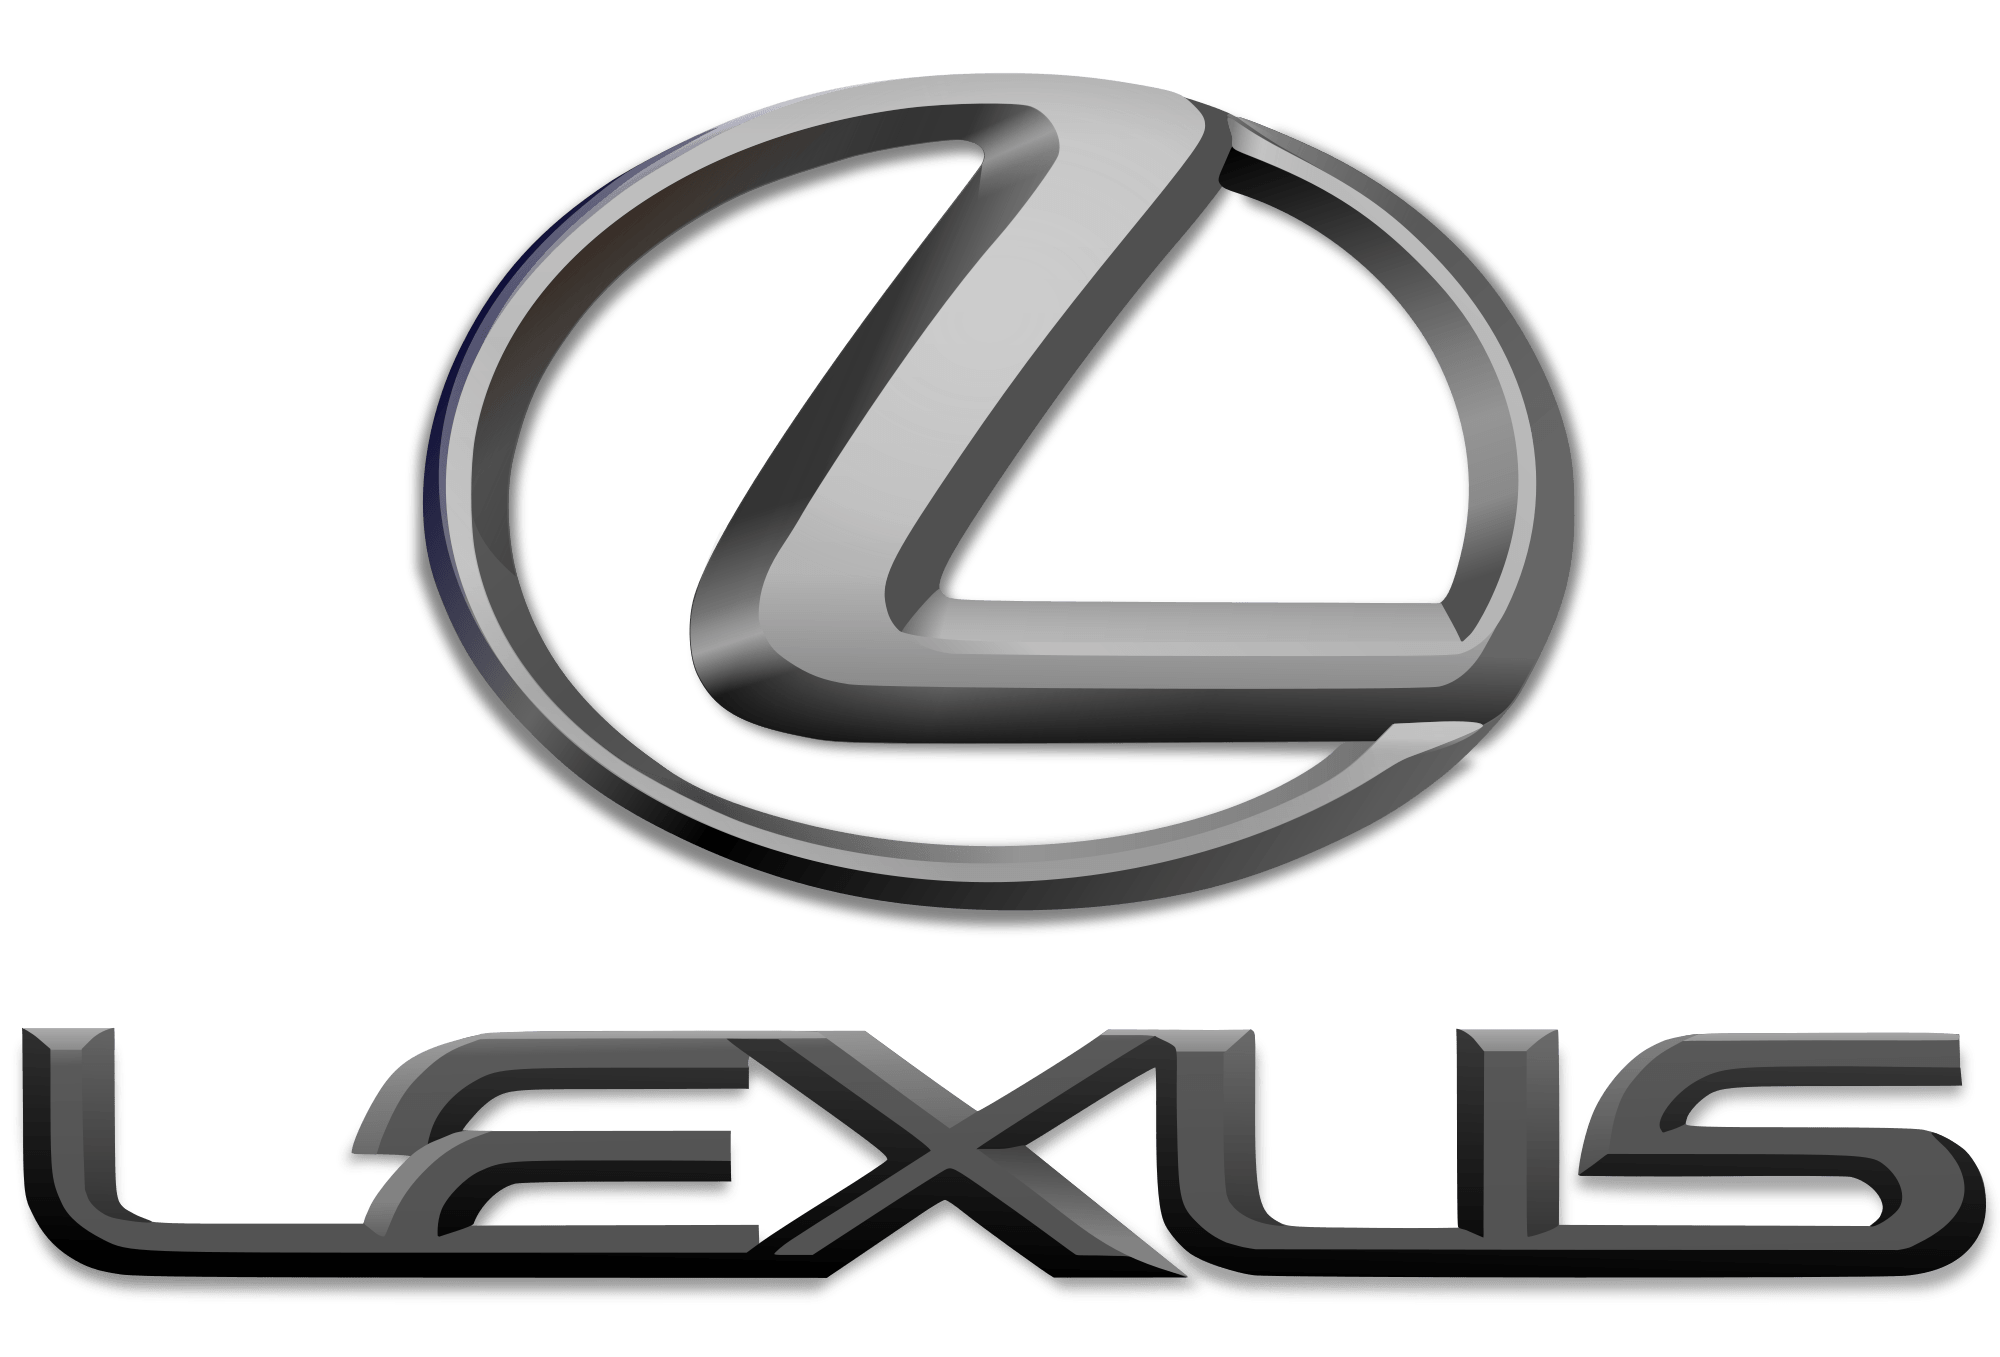 American Automobile Car Logo - Lexus Logo, Lexus Car Symbol Meaning And History | Car Brand Names ...